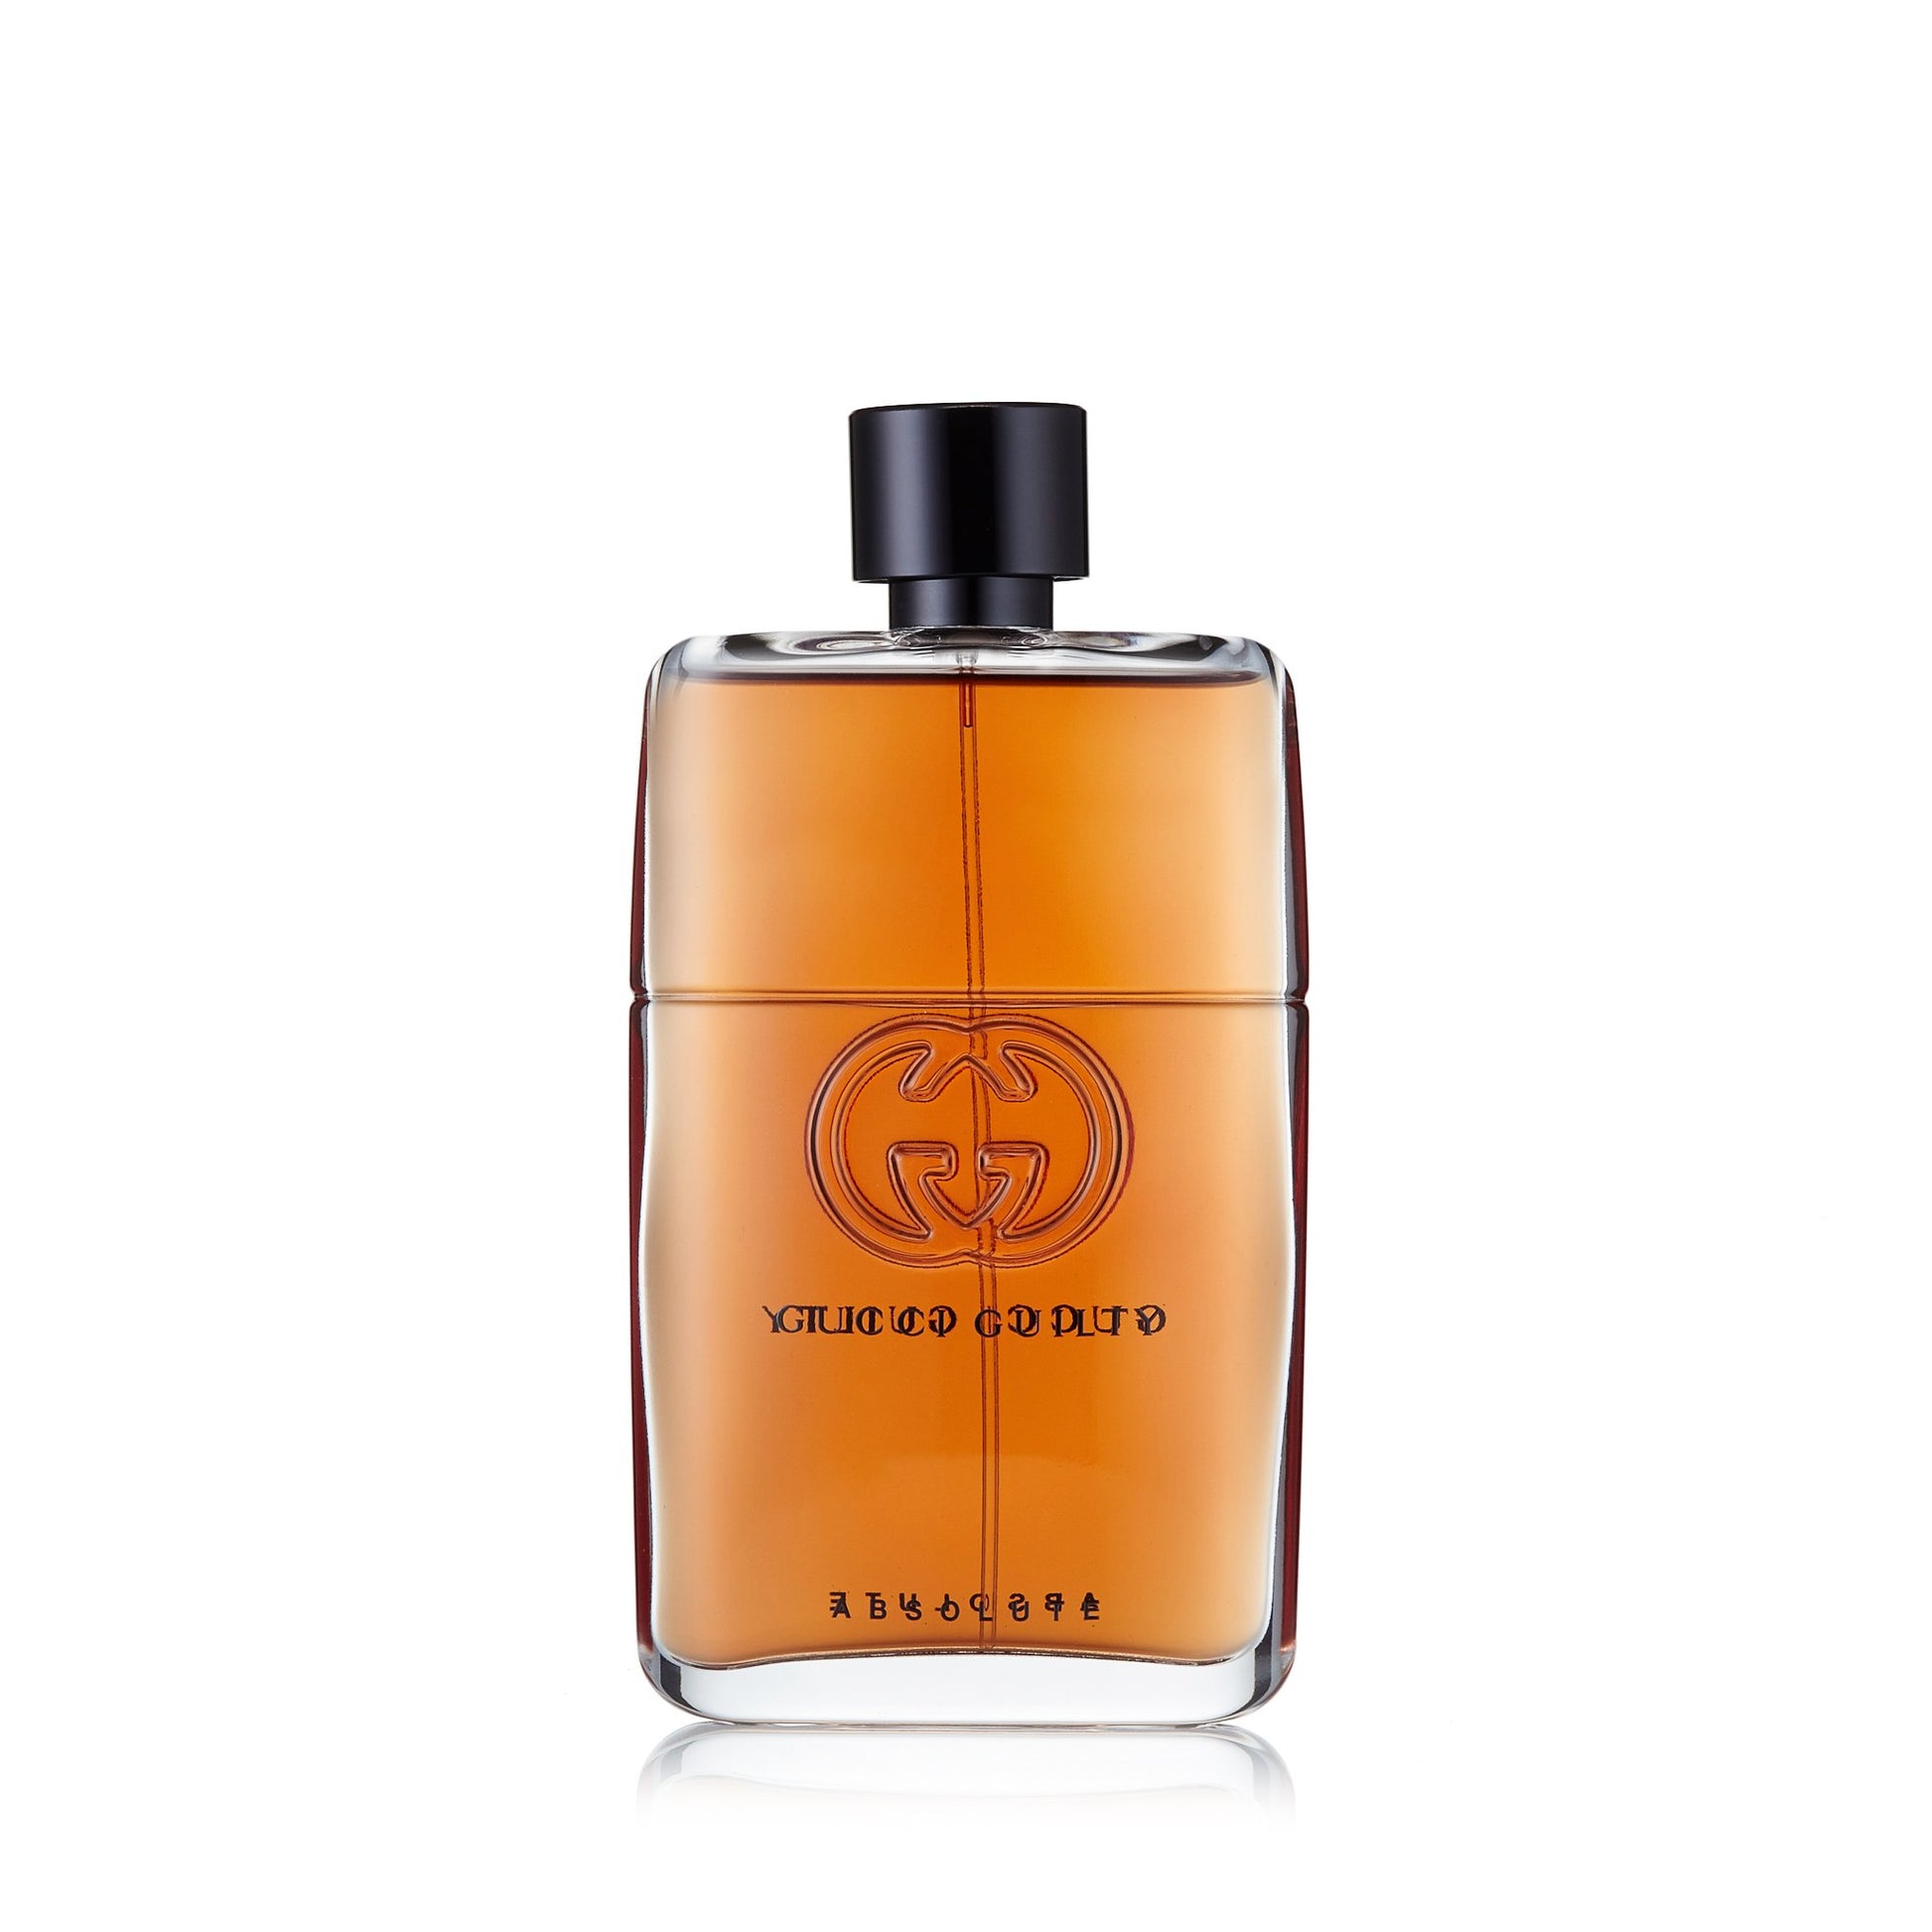 Guilty Absolute Eau de Parfum Spray for Men by Gucci 3.0 oz. Click to open in modal